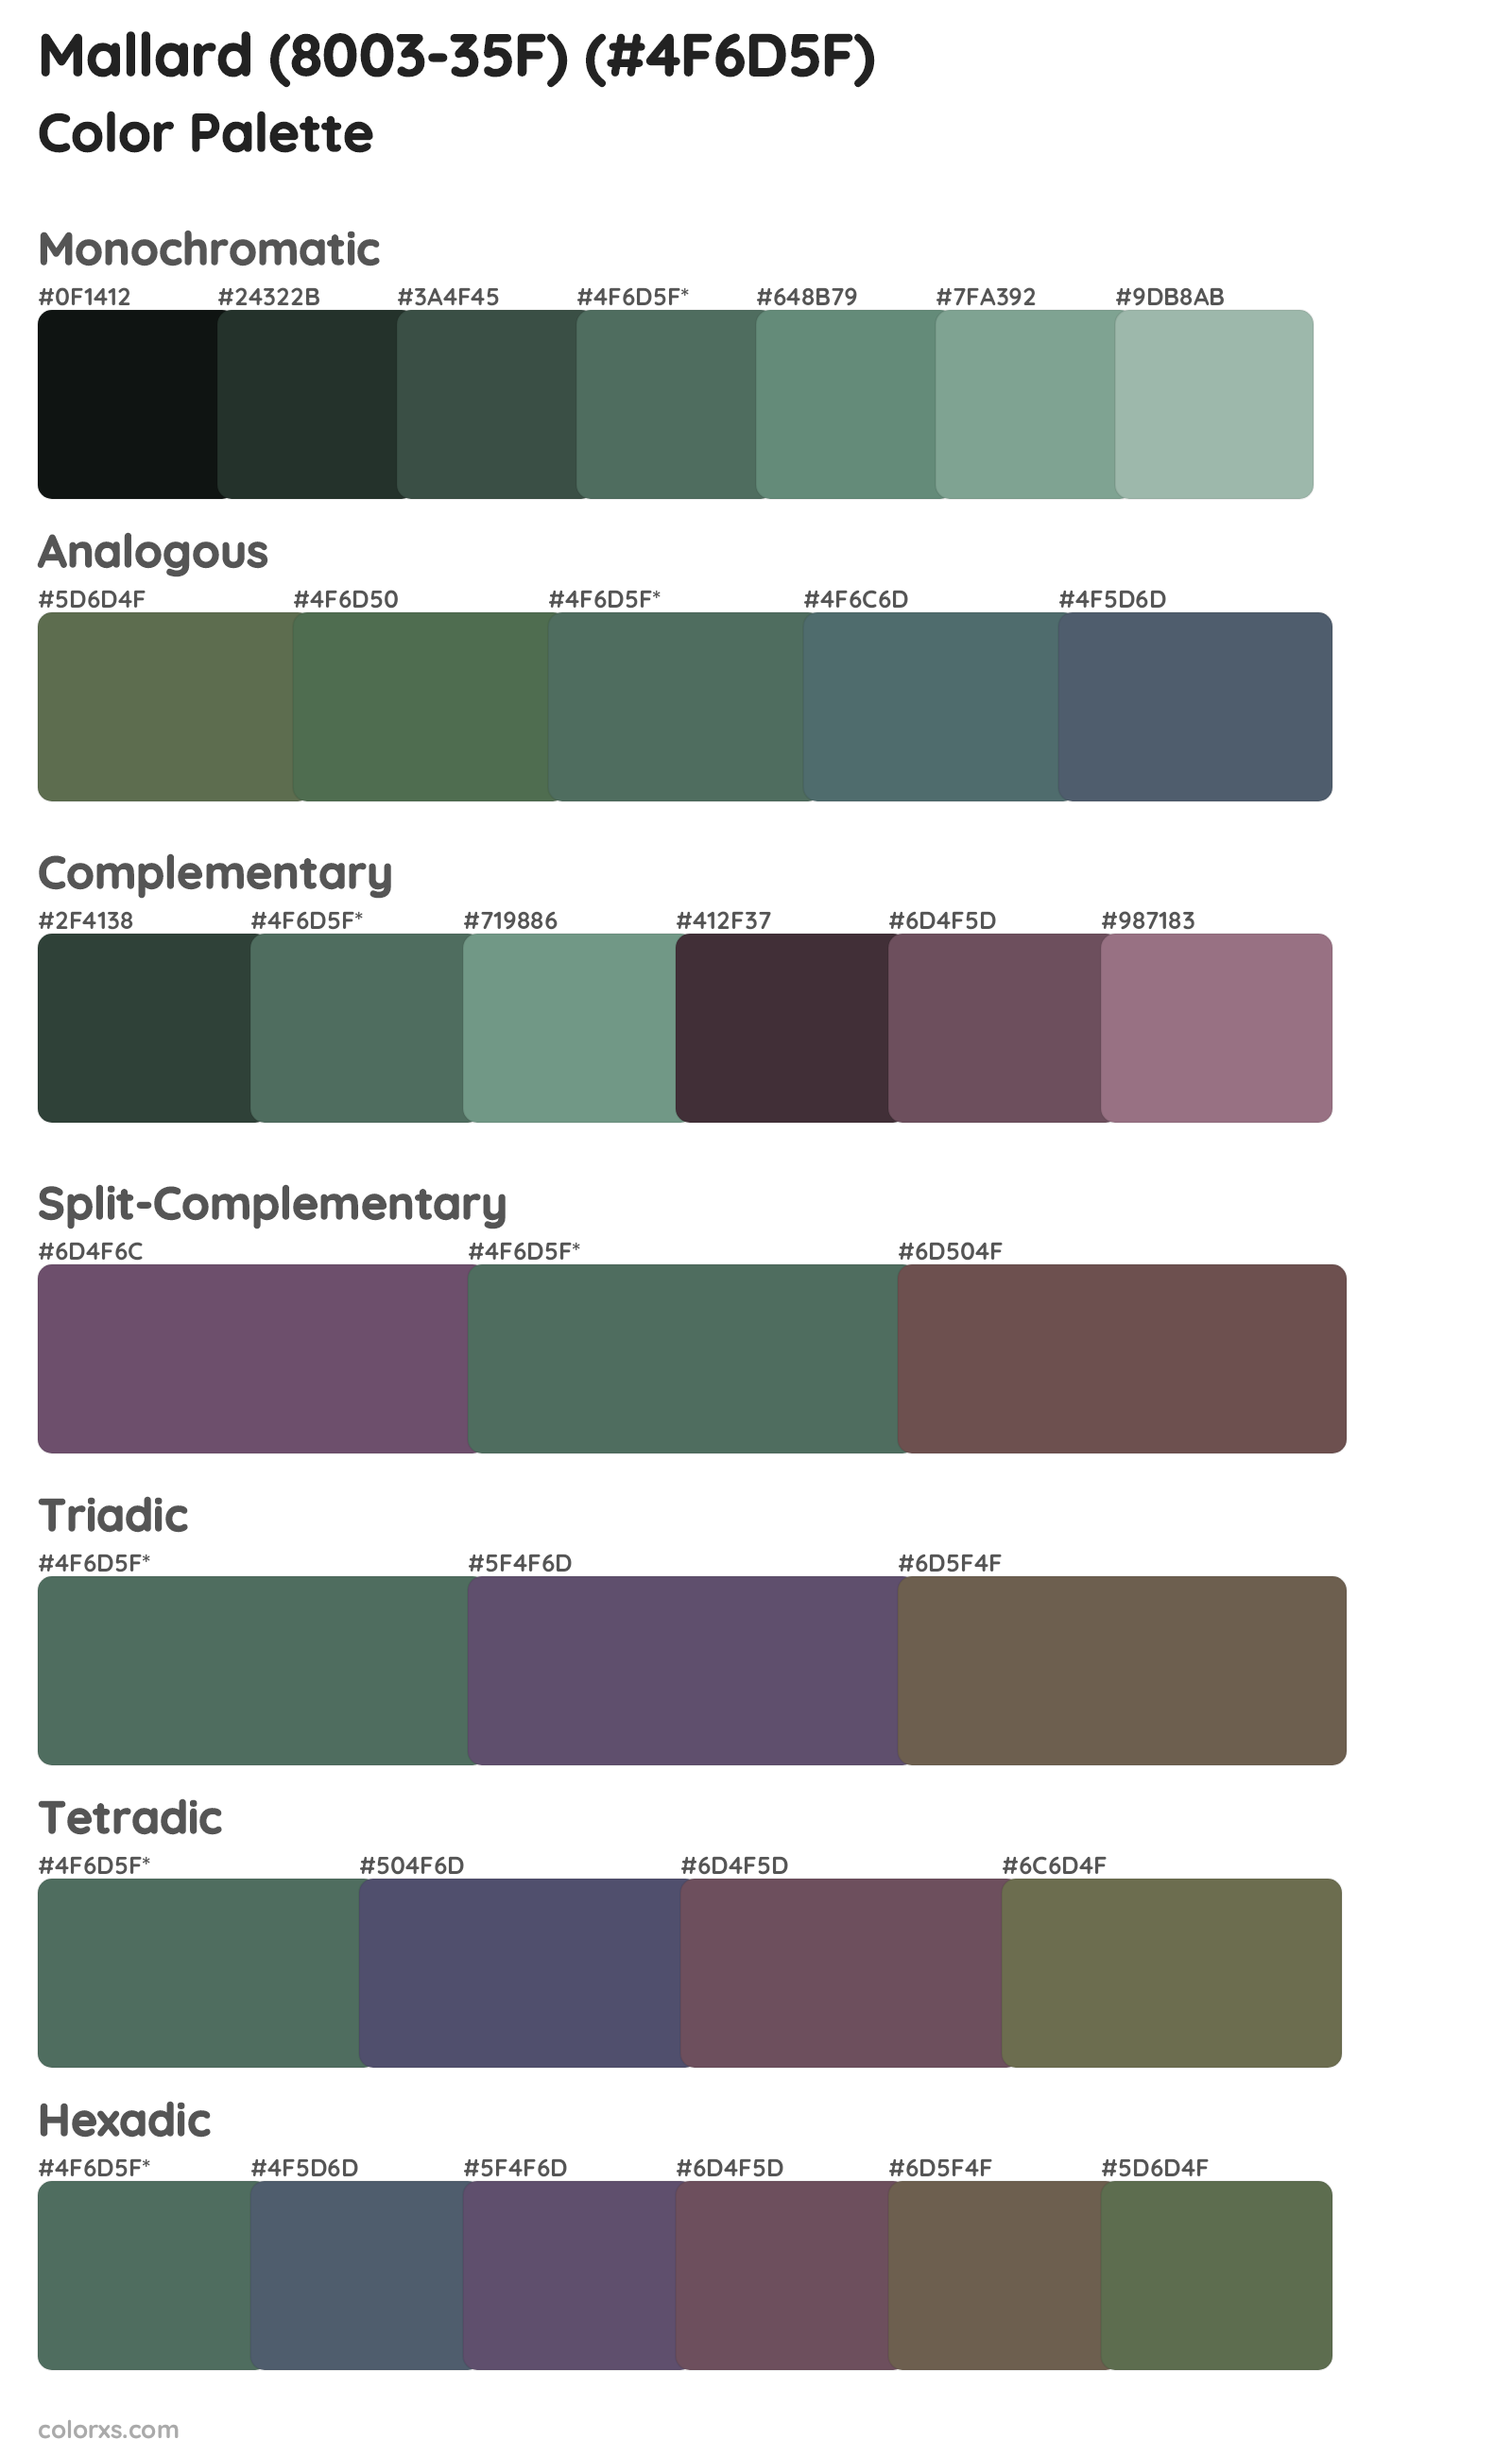 Mallard (8003-35F) Color Scheme Palettes